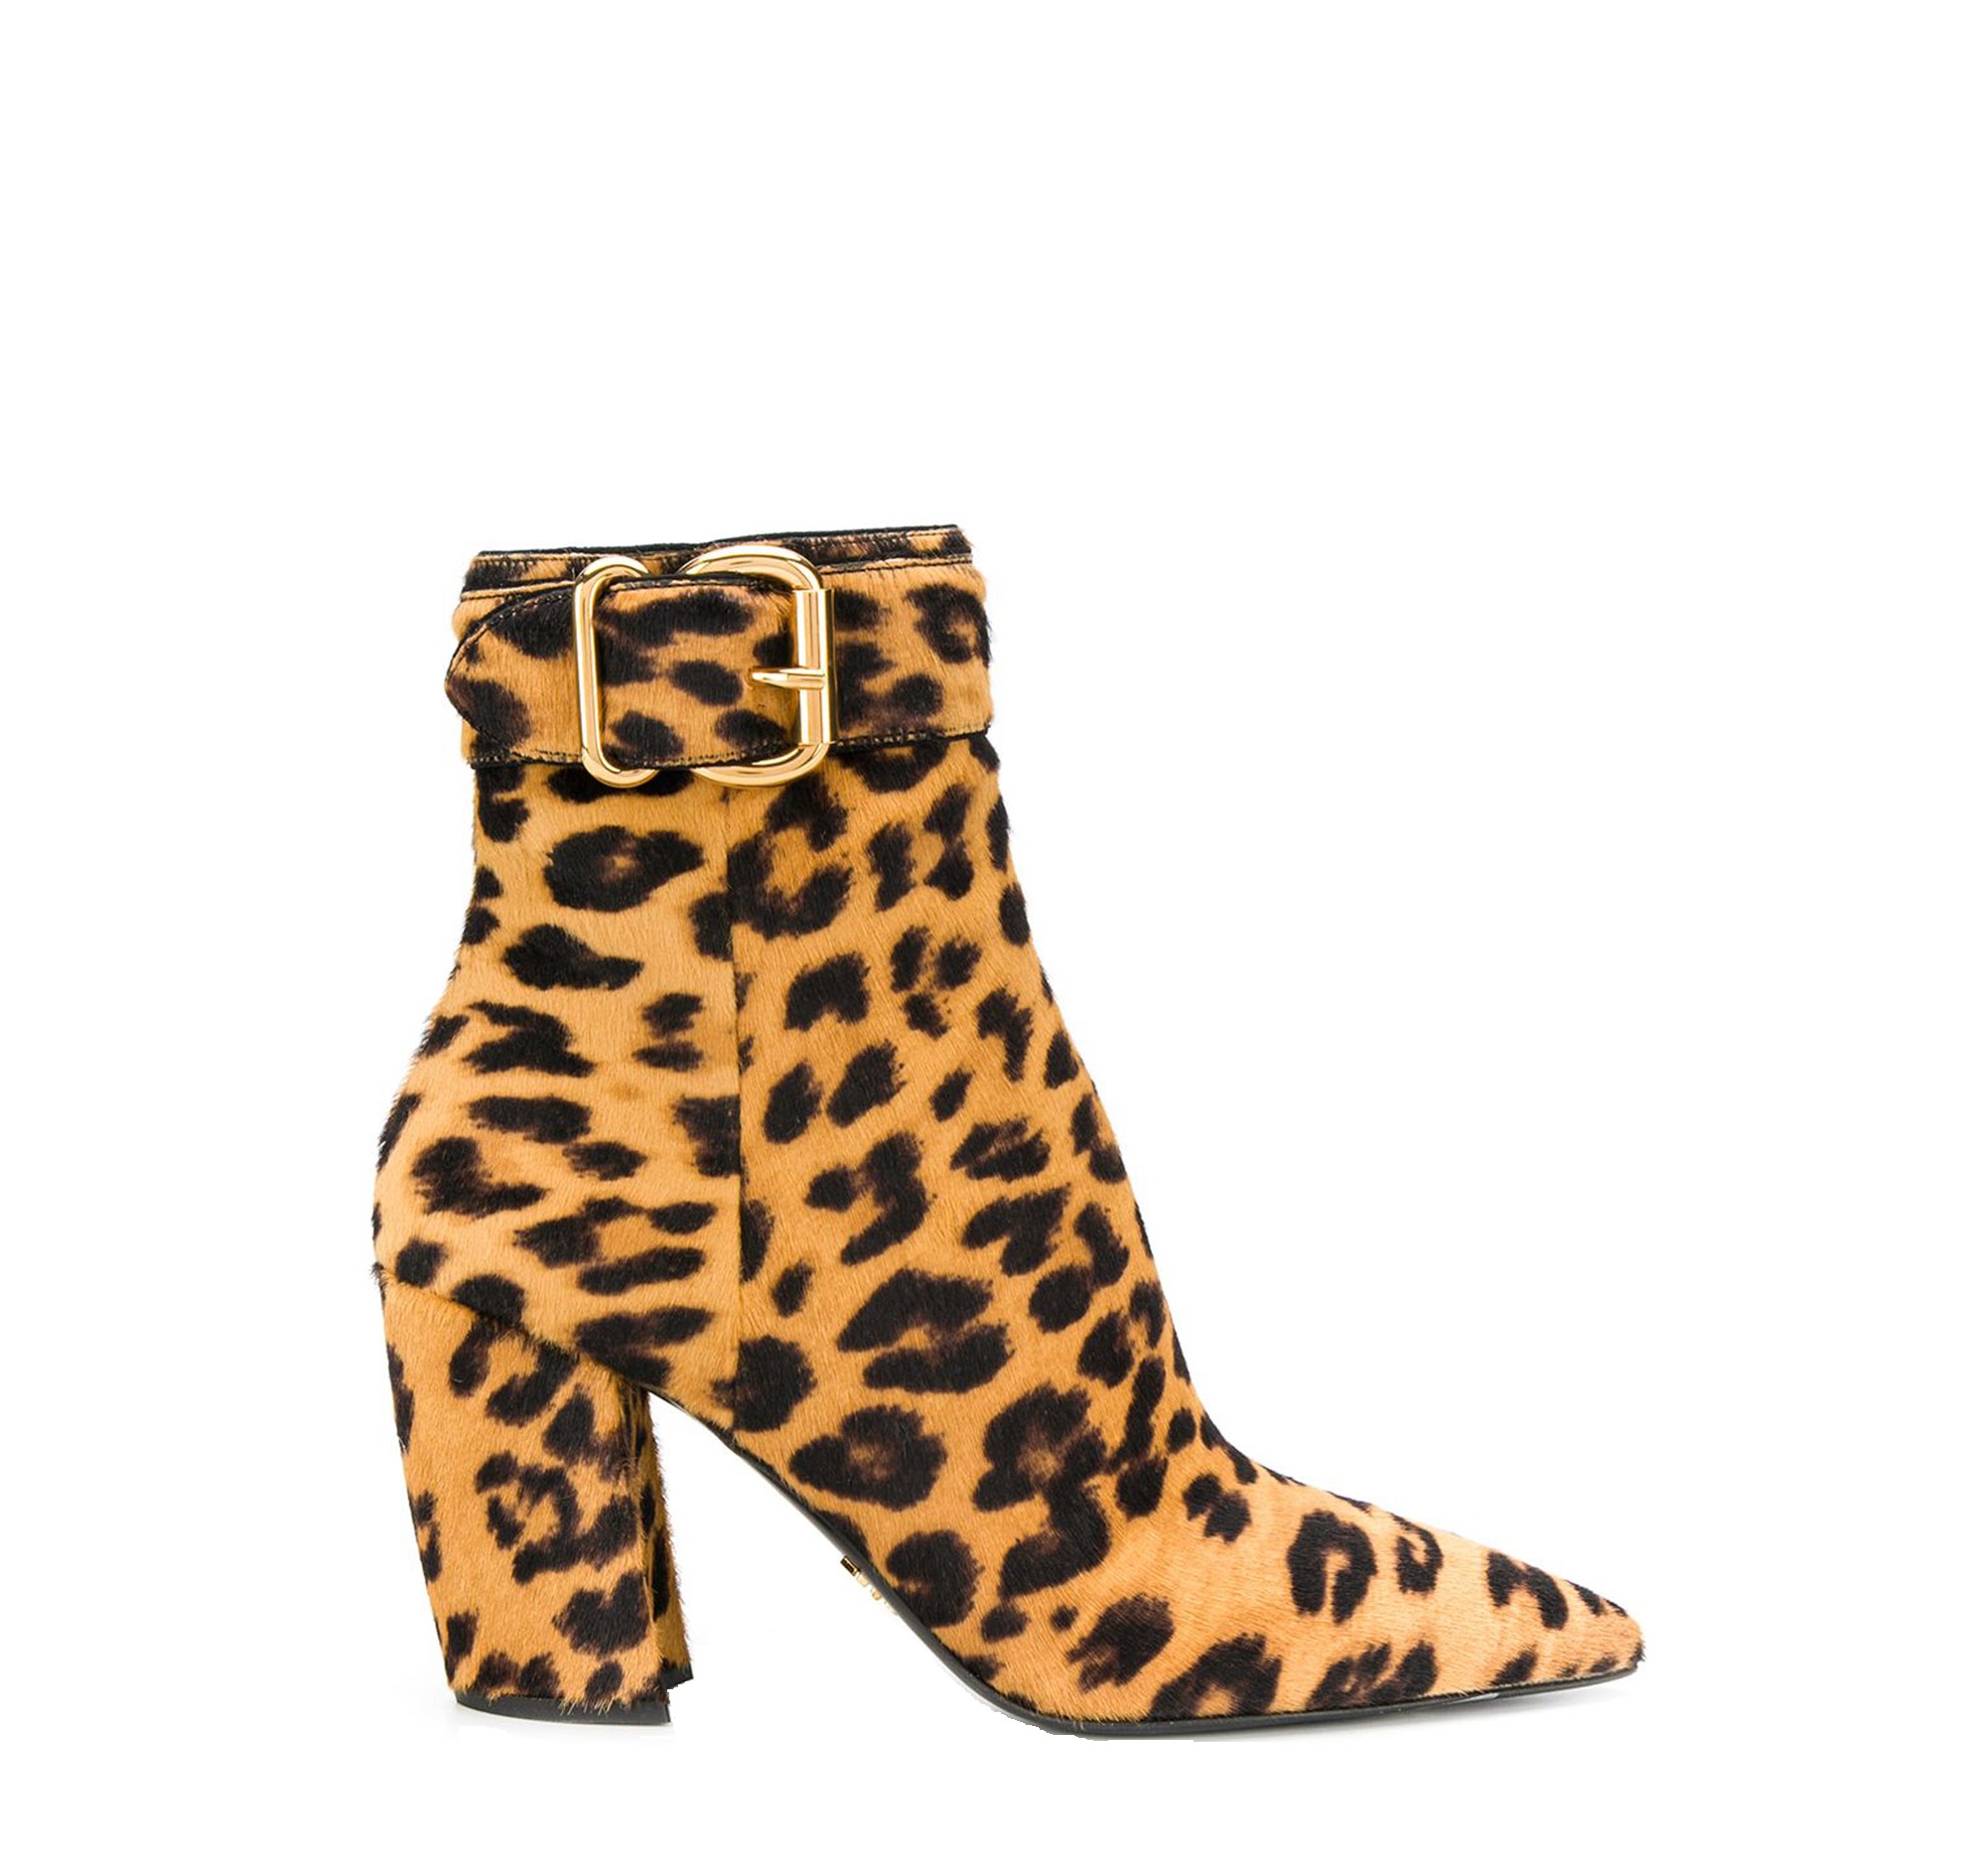 Prada Leopard Print Pony Hair Block Heel Ankle Boots Size 37